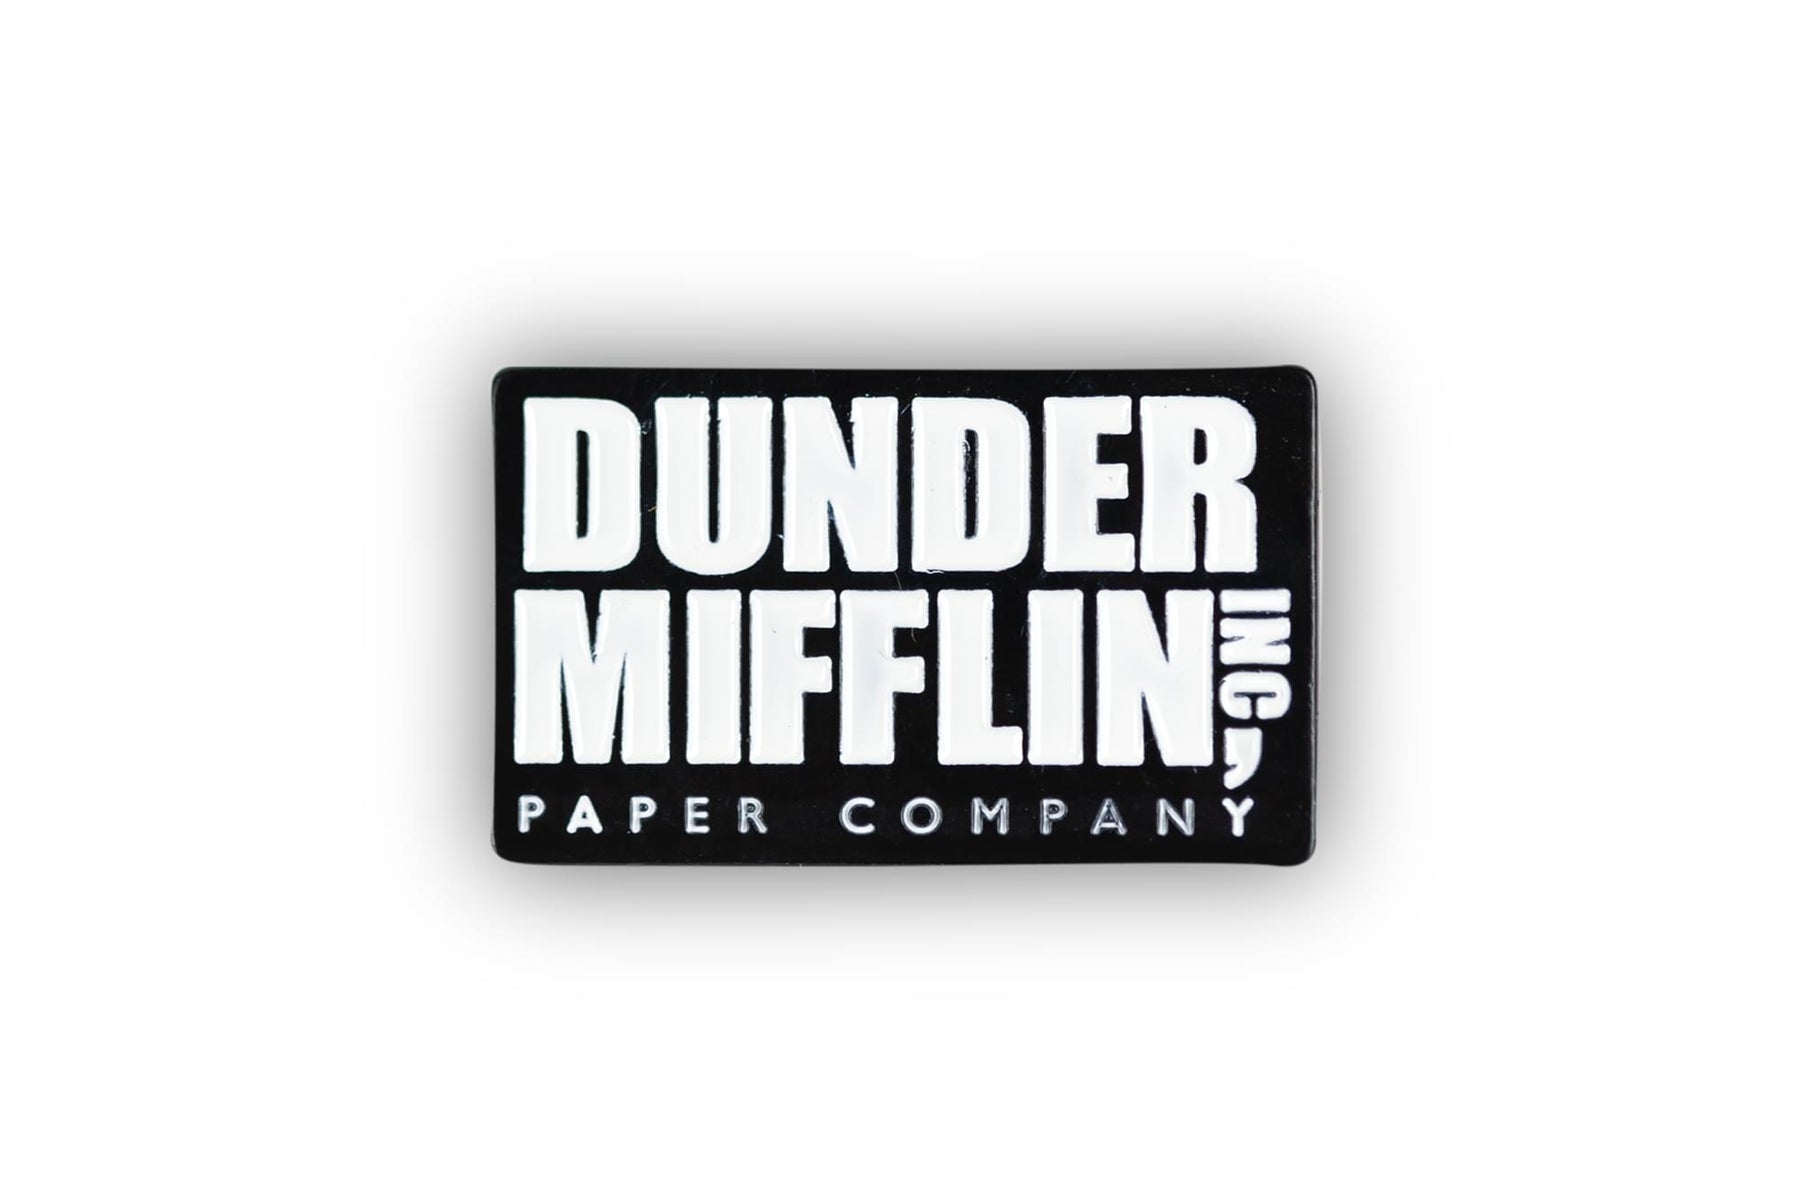 Just Funky JFL-OFF-PIN-25070-C The Office Dunder Mifflin Logo